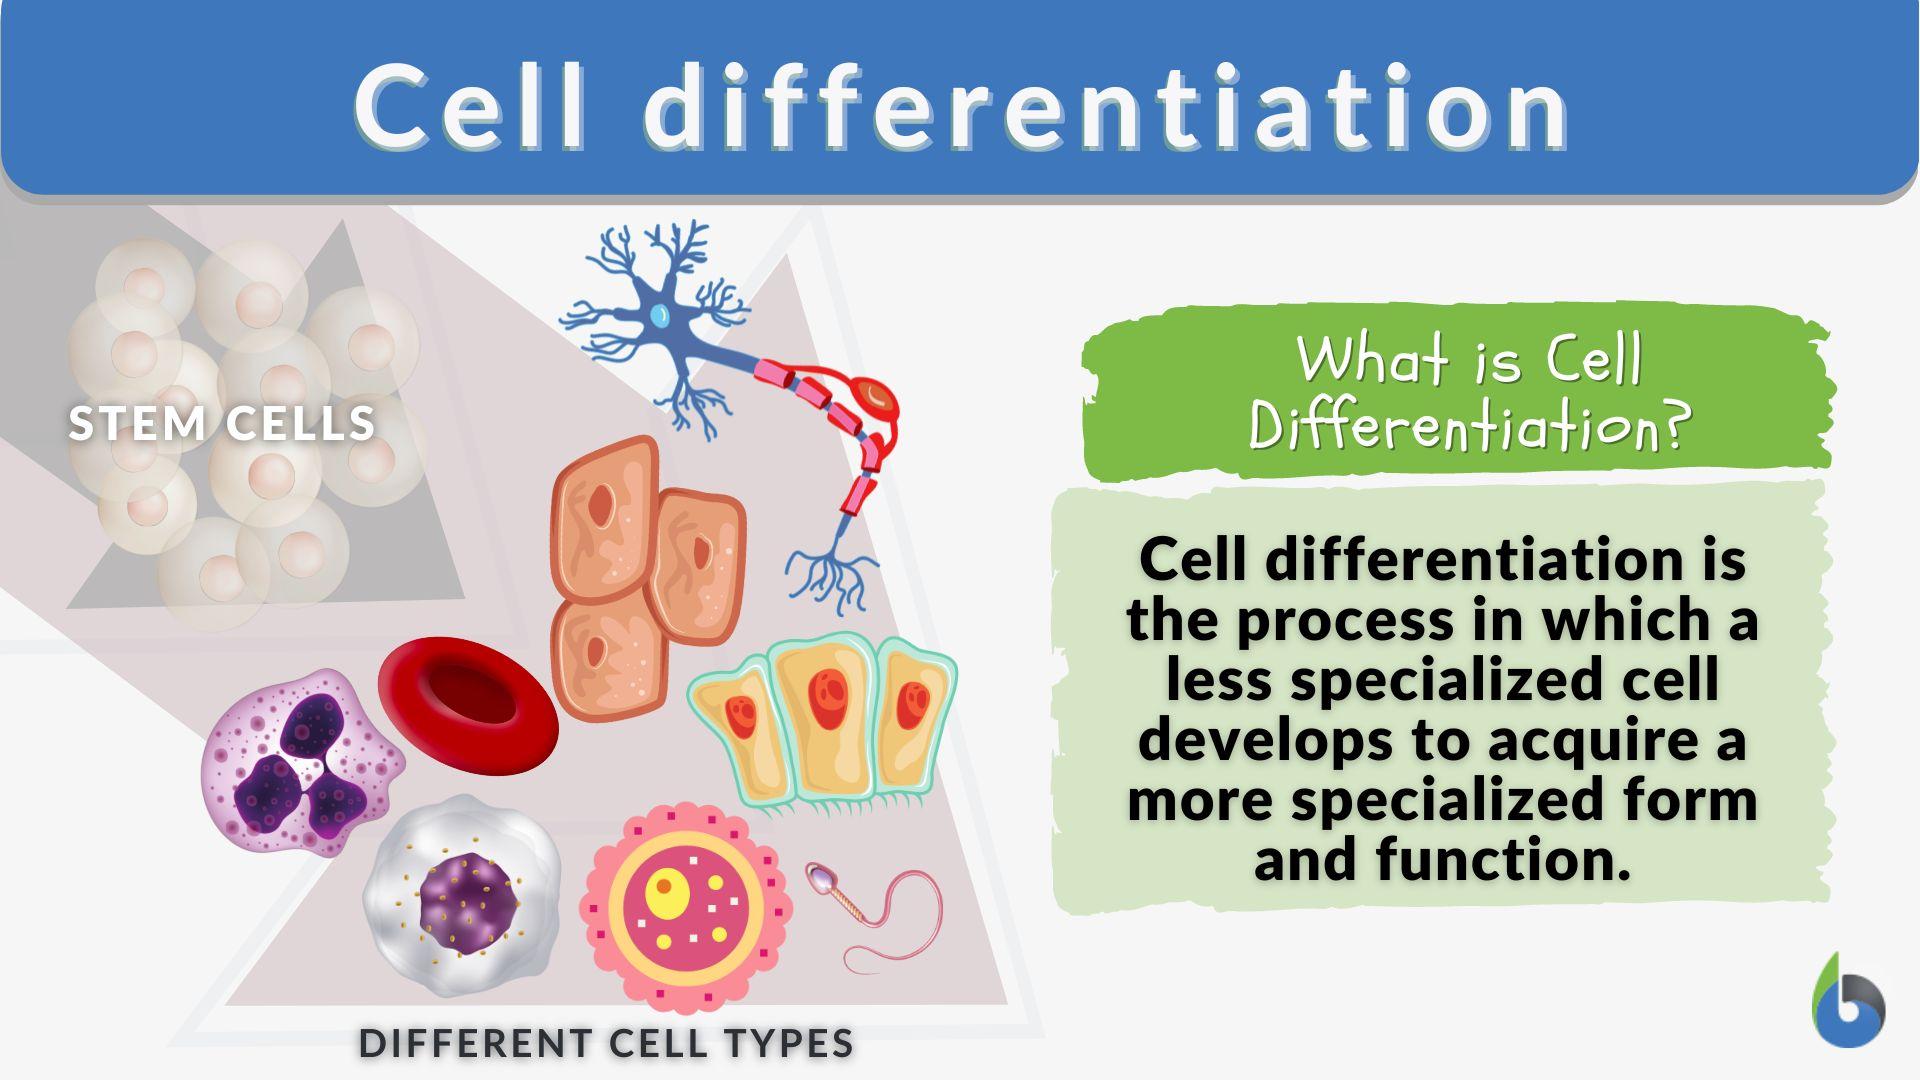 Summary of b-cell regeneration strategies. Novel b-cells can be